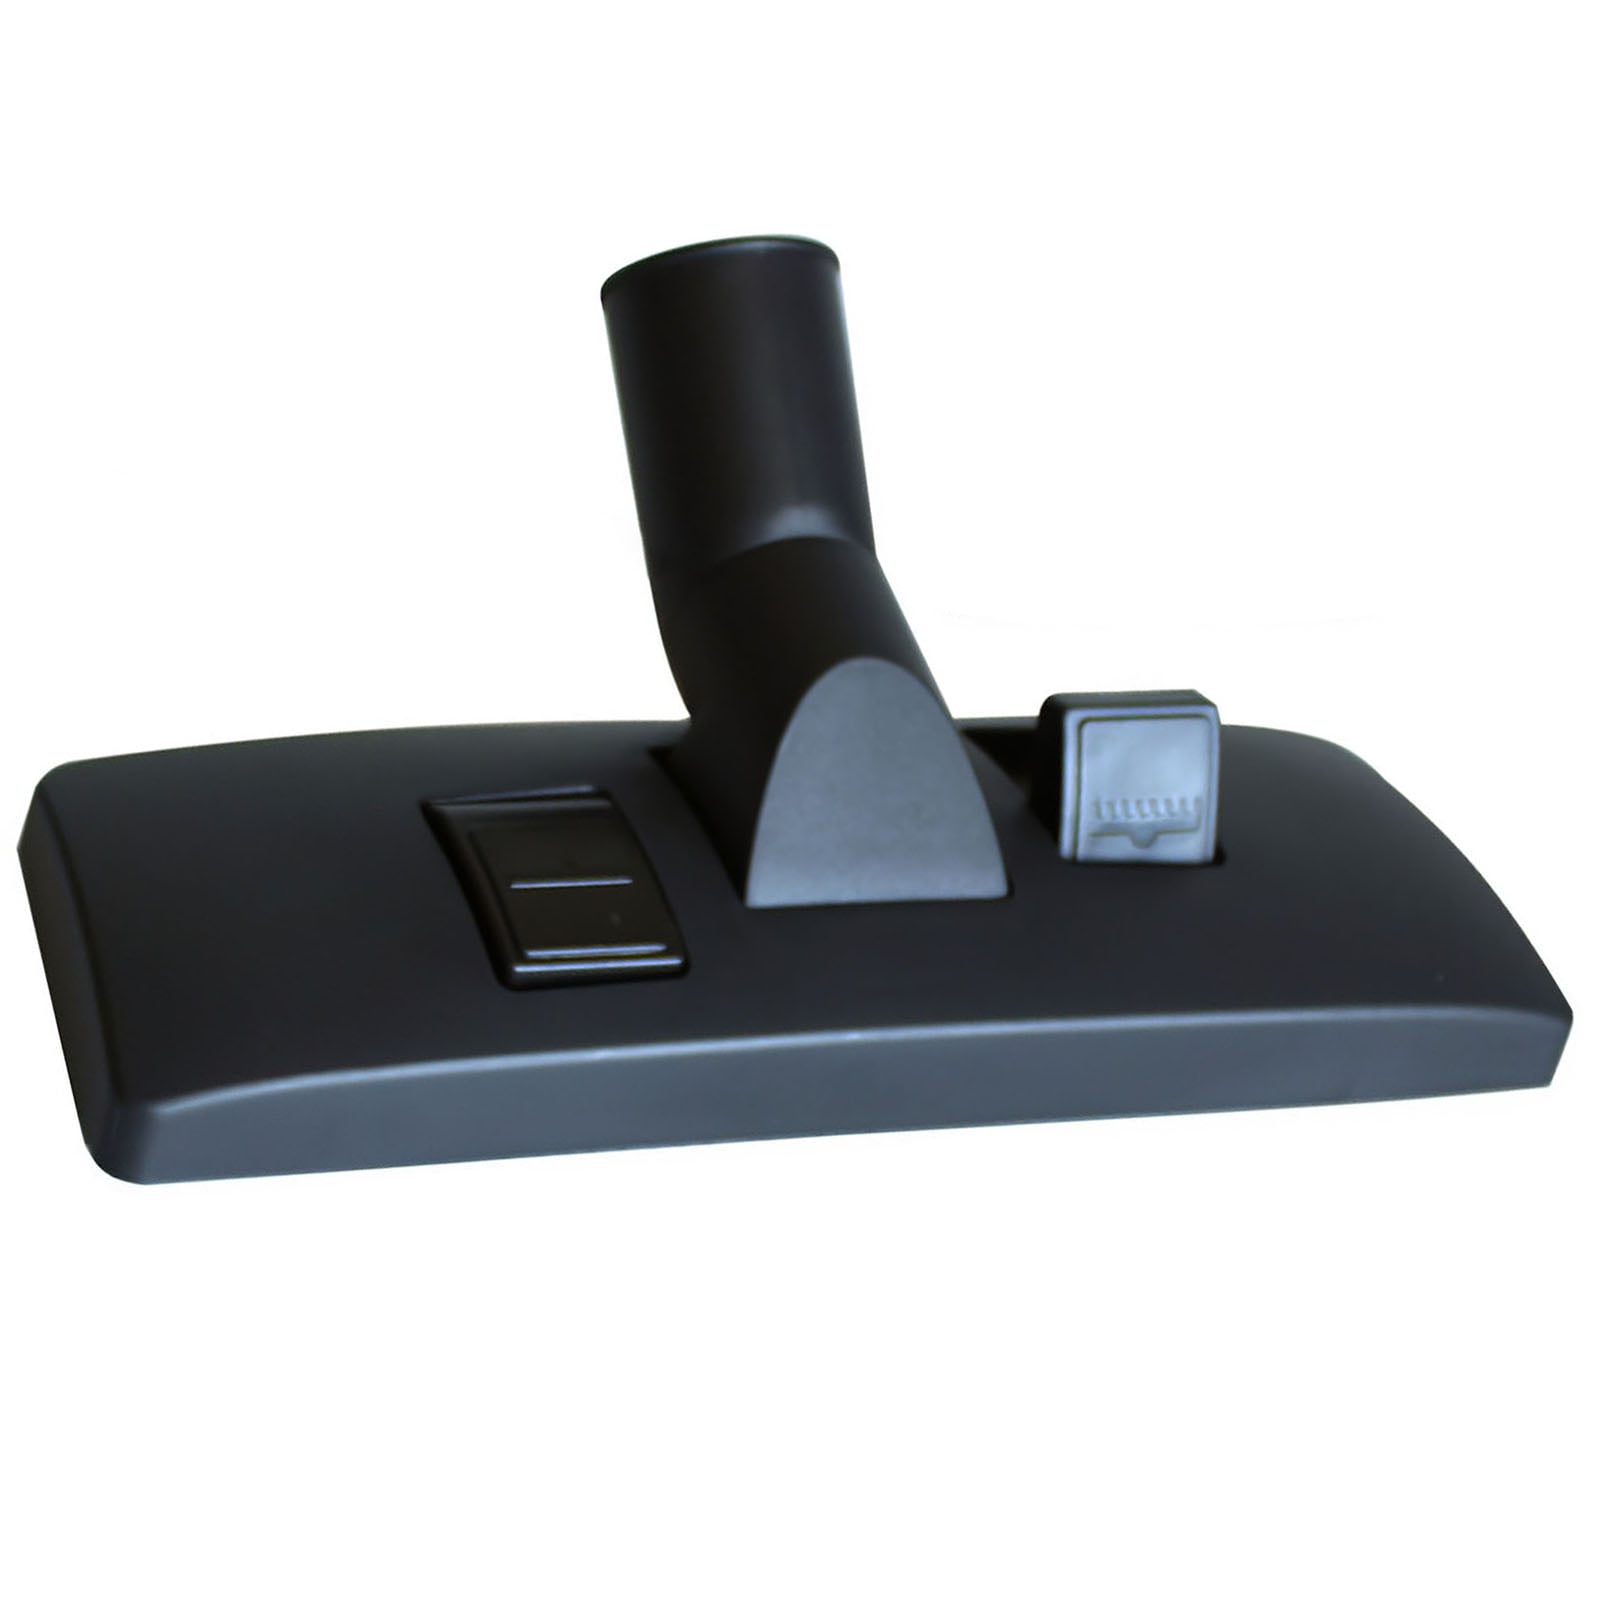 1x Universal Brush Head For Vacuum Cleaner Wheeled Carpet Floor Hoover Tool 32mm 